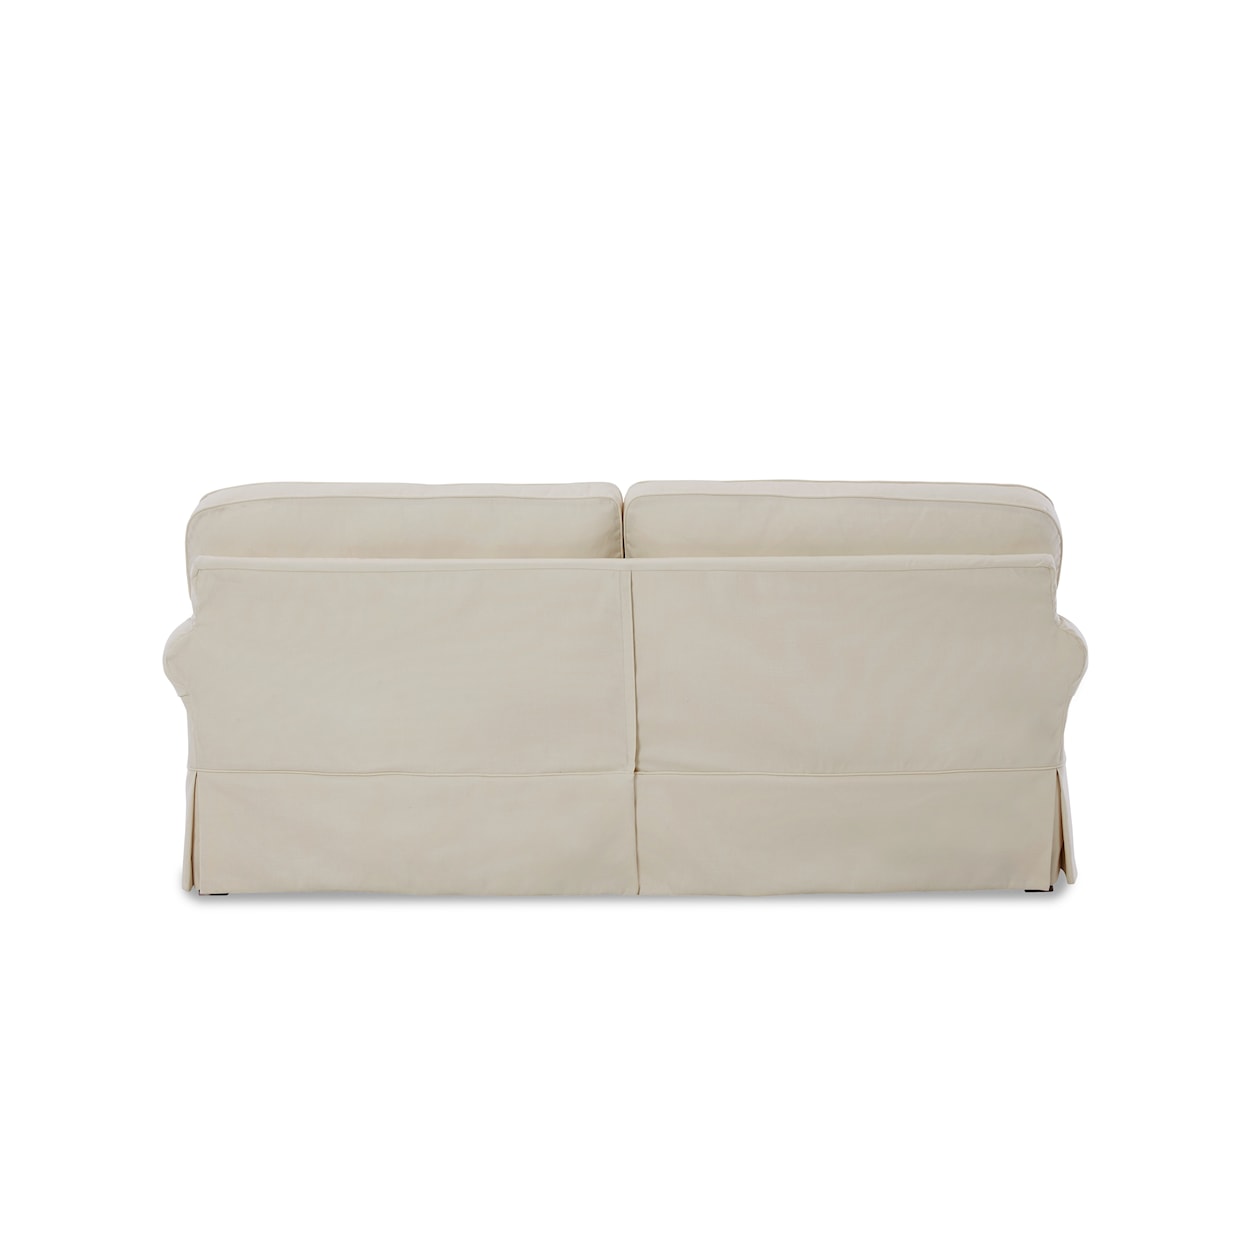 Craftmaster 917450BD Queen Sleeper Sofa (2-Seat)